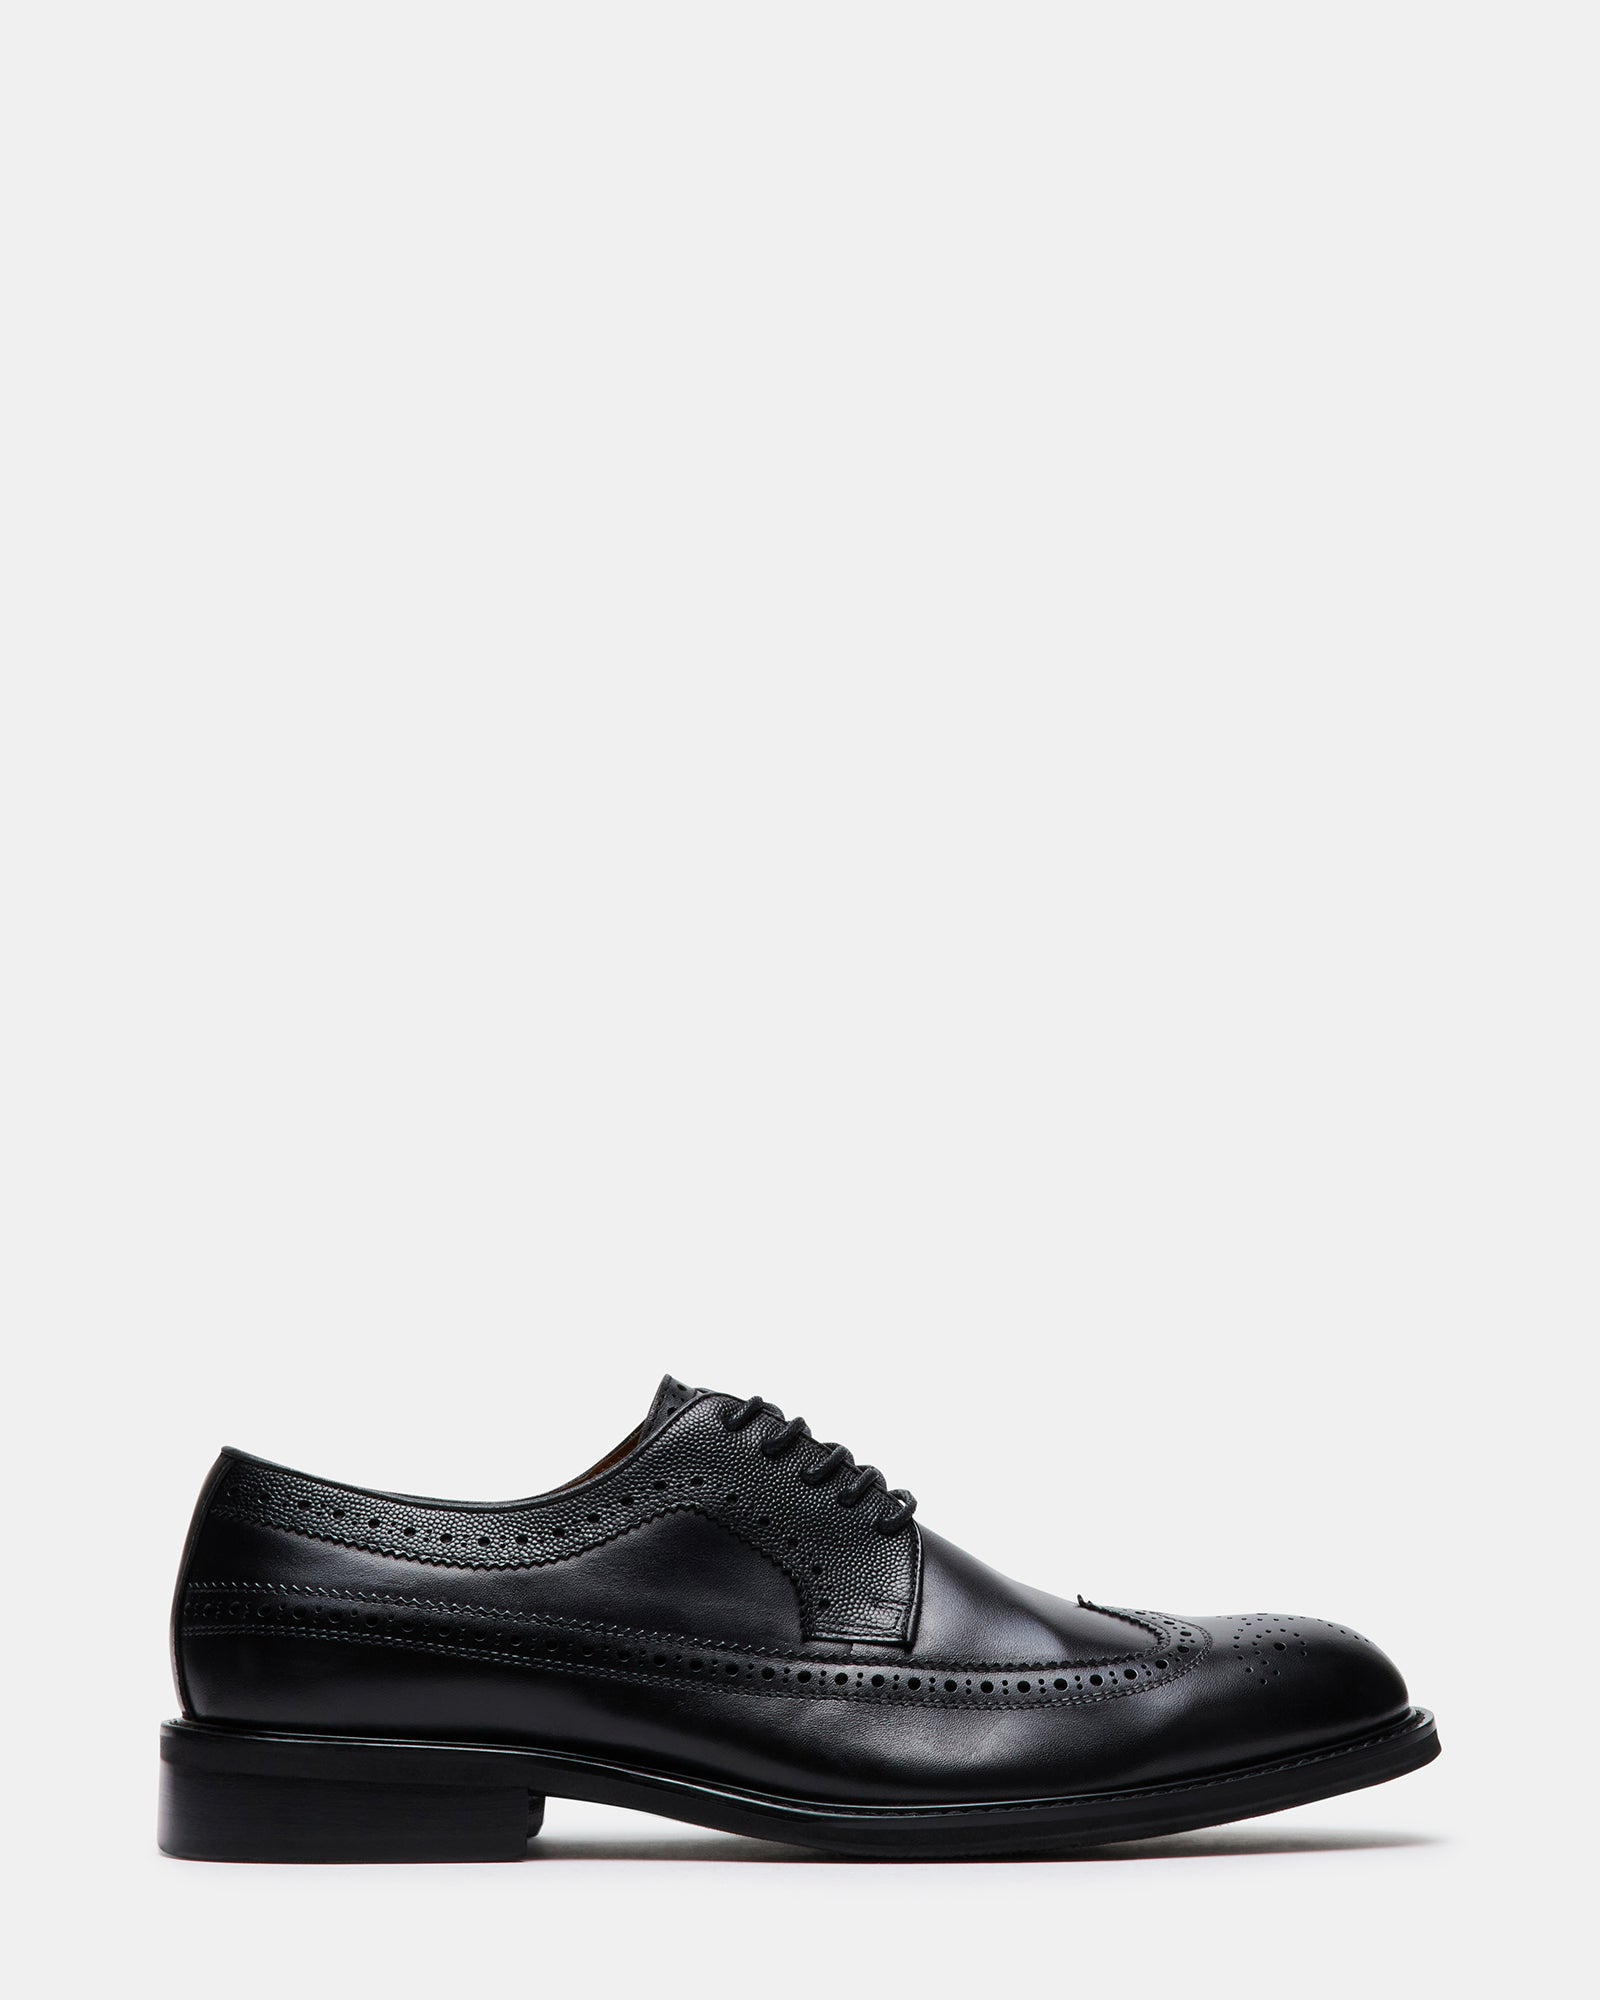 XAVION Black Leather Lace-Up Dress Shoe | Men's Dress Shoes – Steve Madden